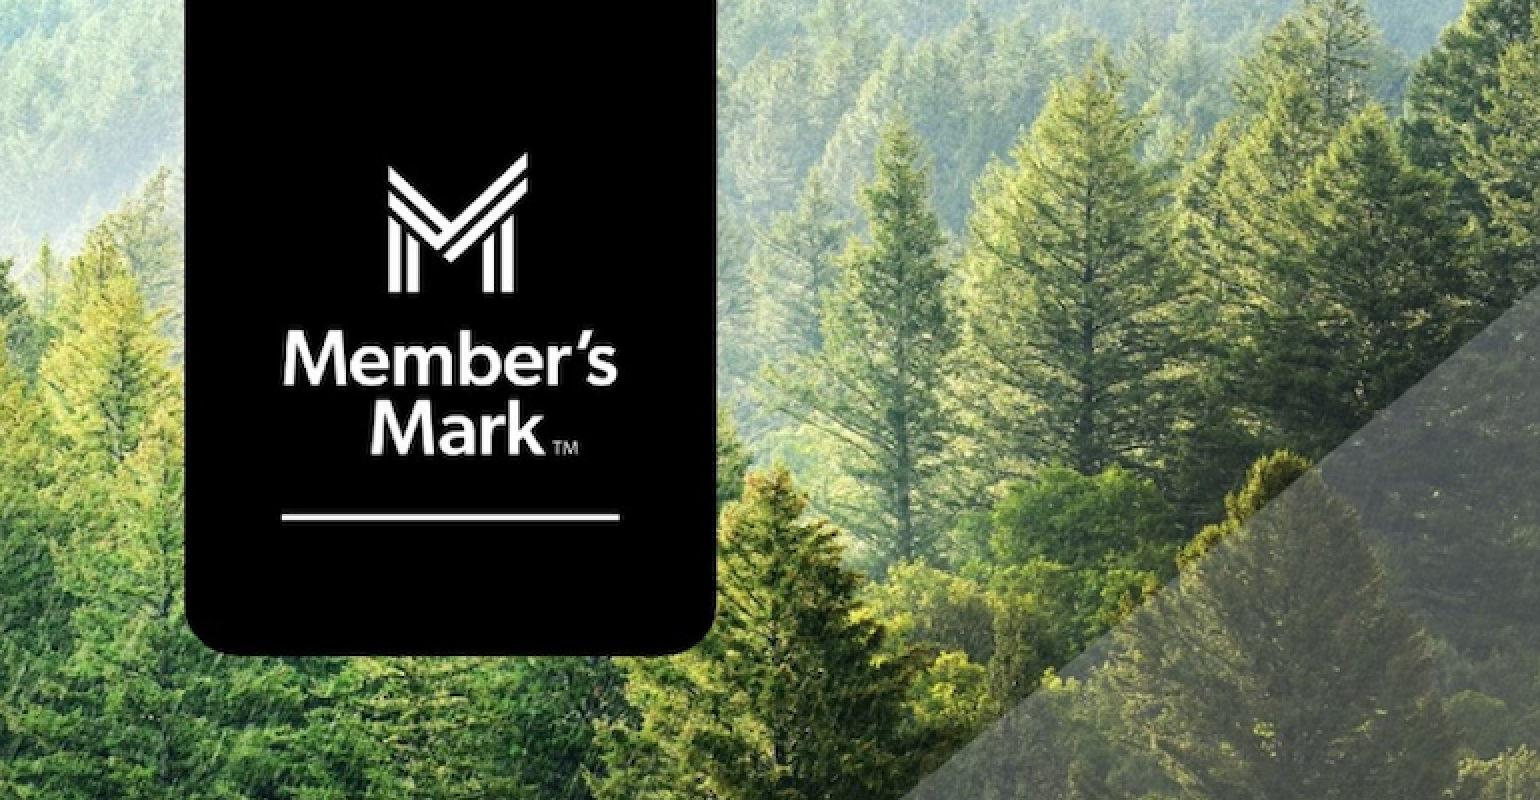 Member's Mark - Logo Redesign (Concept)